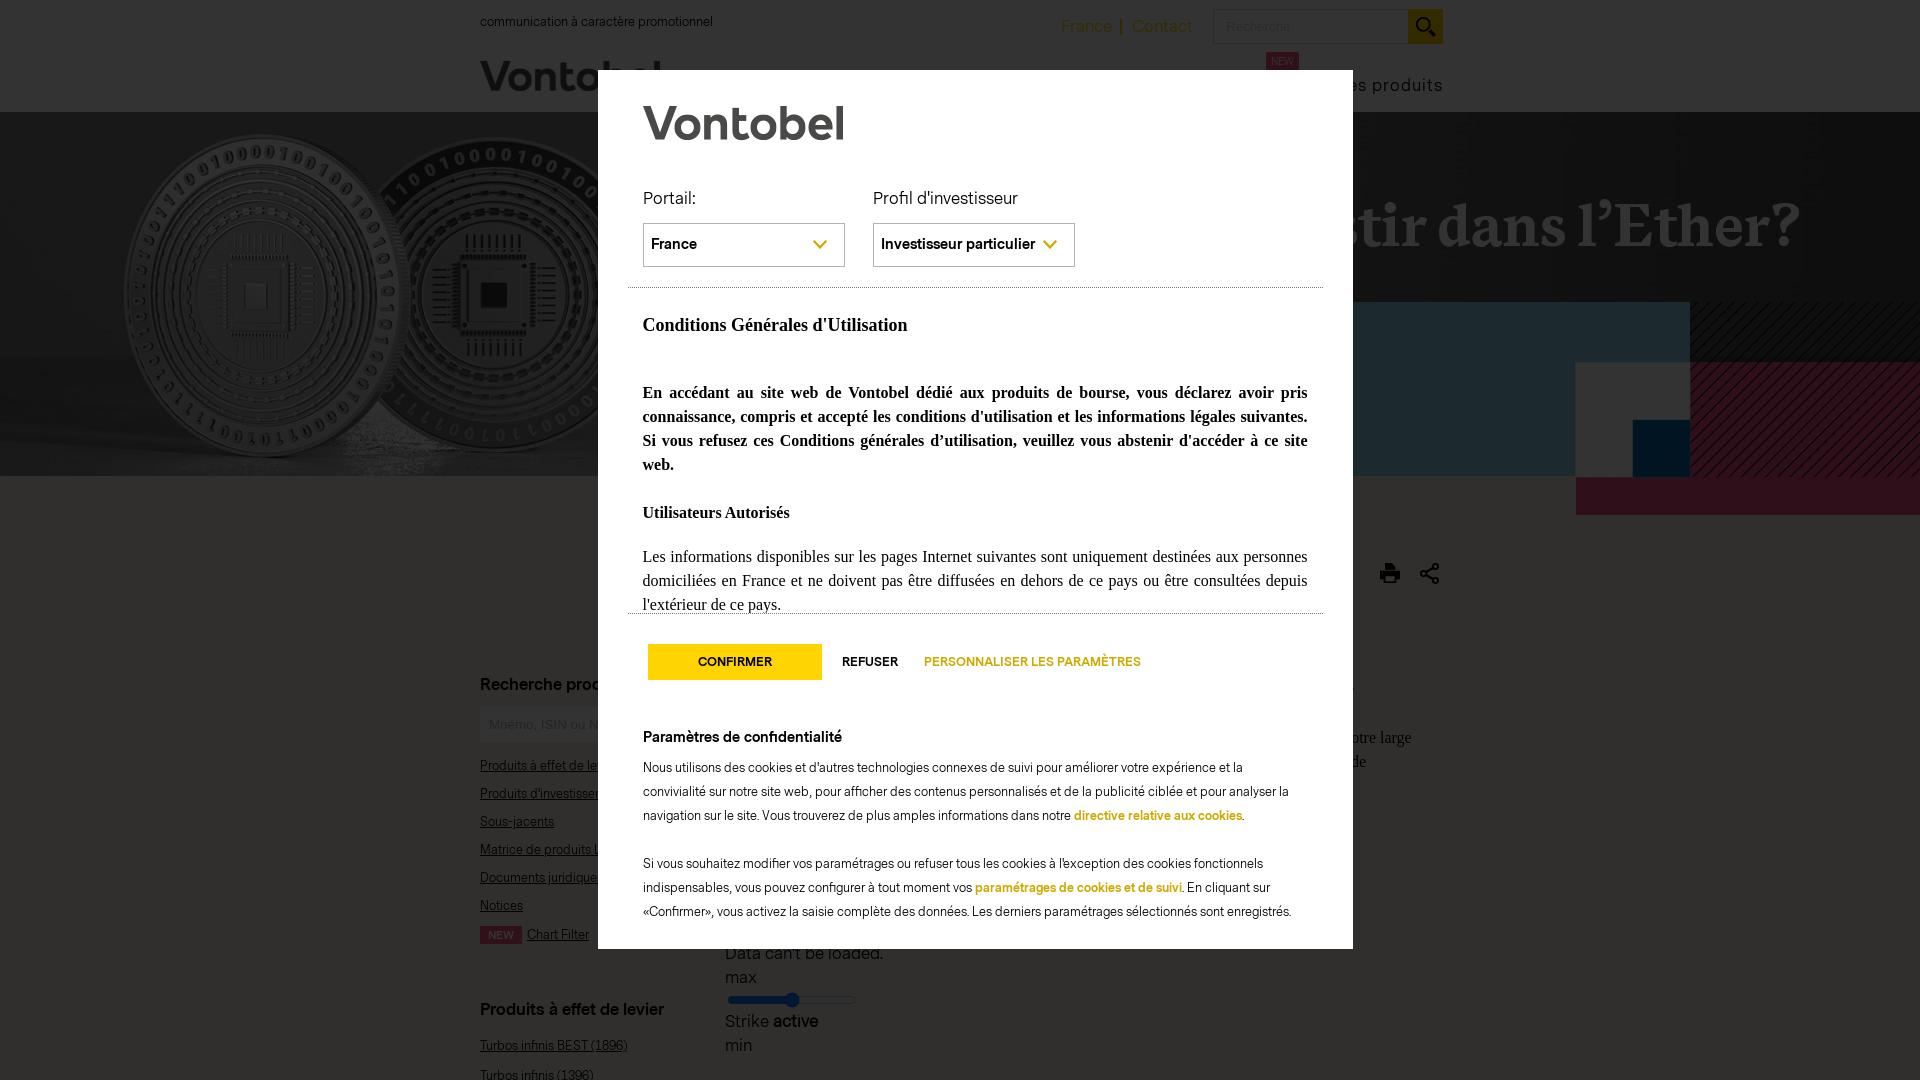 Website User Bewertung zu bourse.vontobel.com